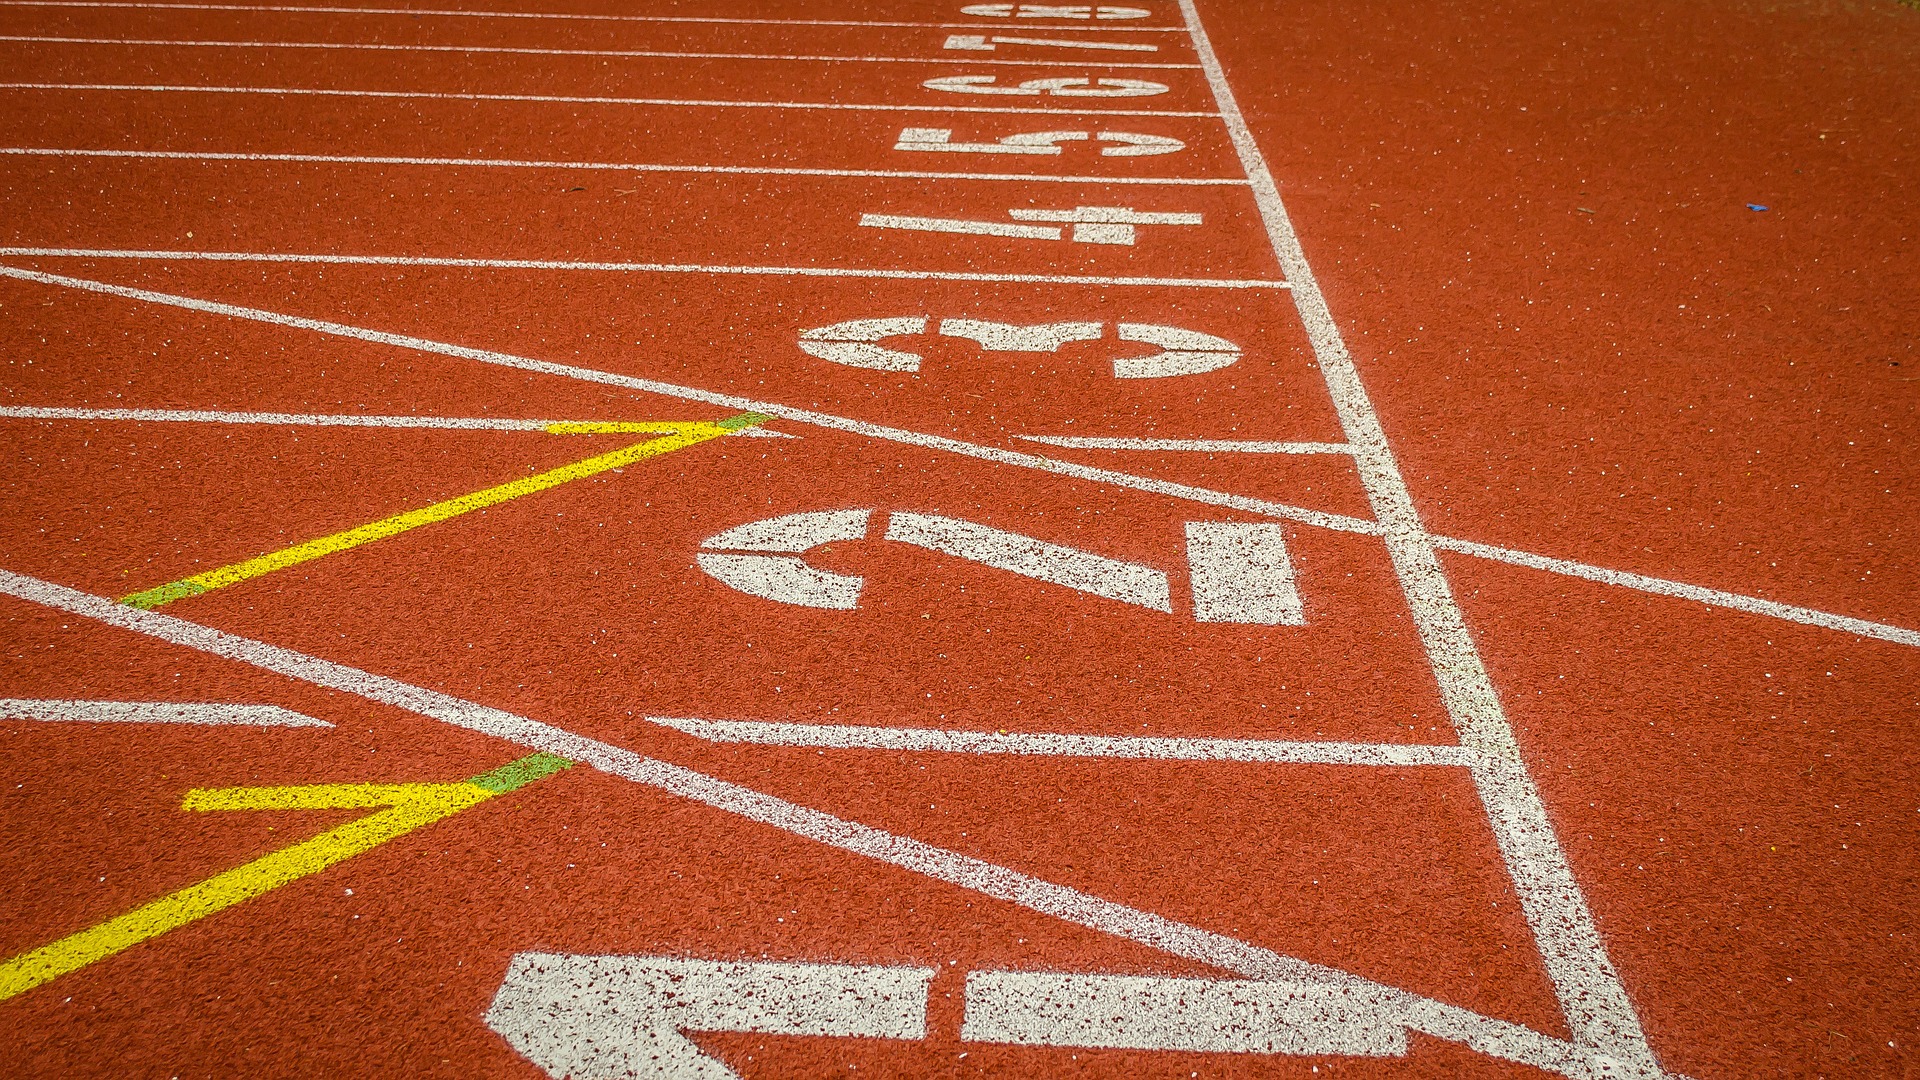 Tartan track for athletics